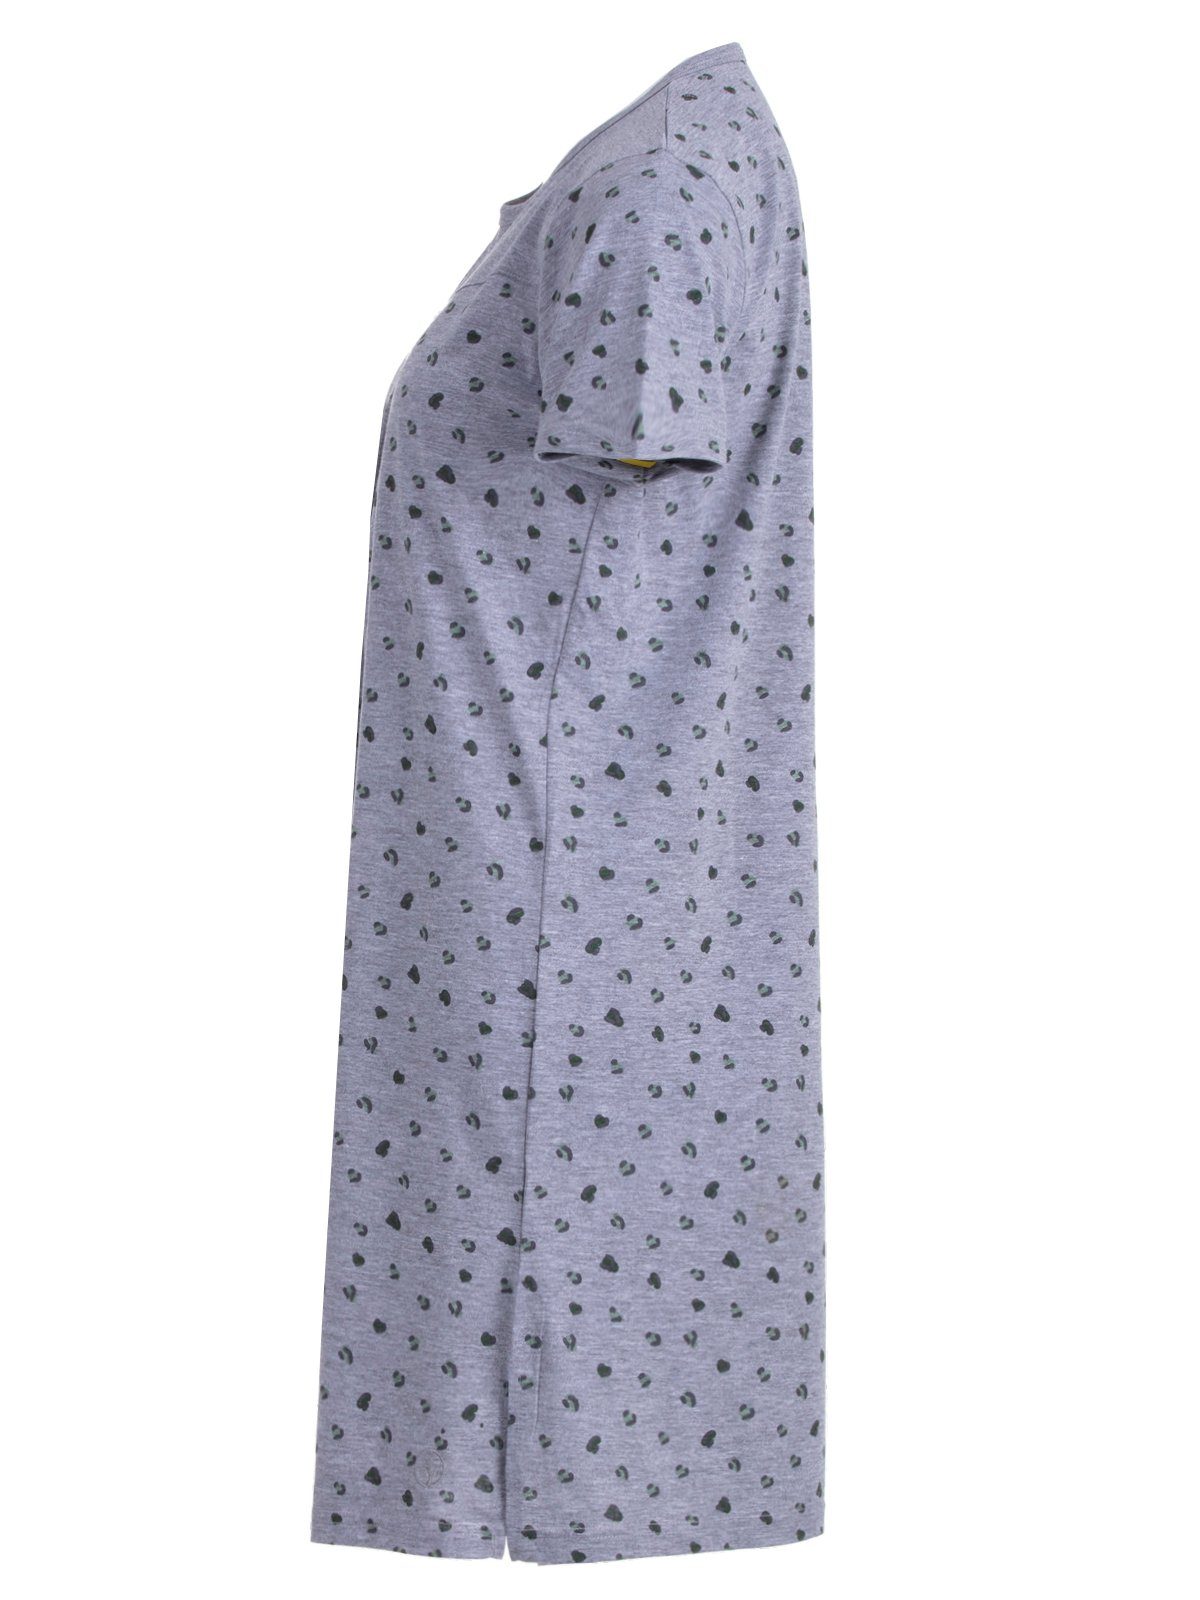 Herzleo Nachthemd - Nachthemd Kellerfalte Kurzarm zeitlos grau